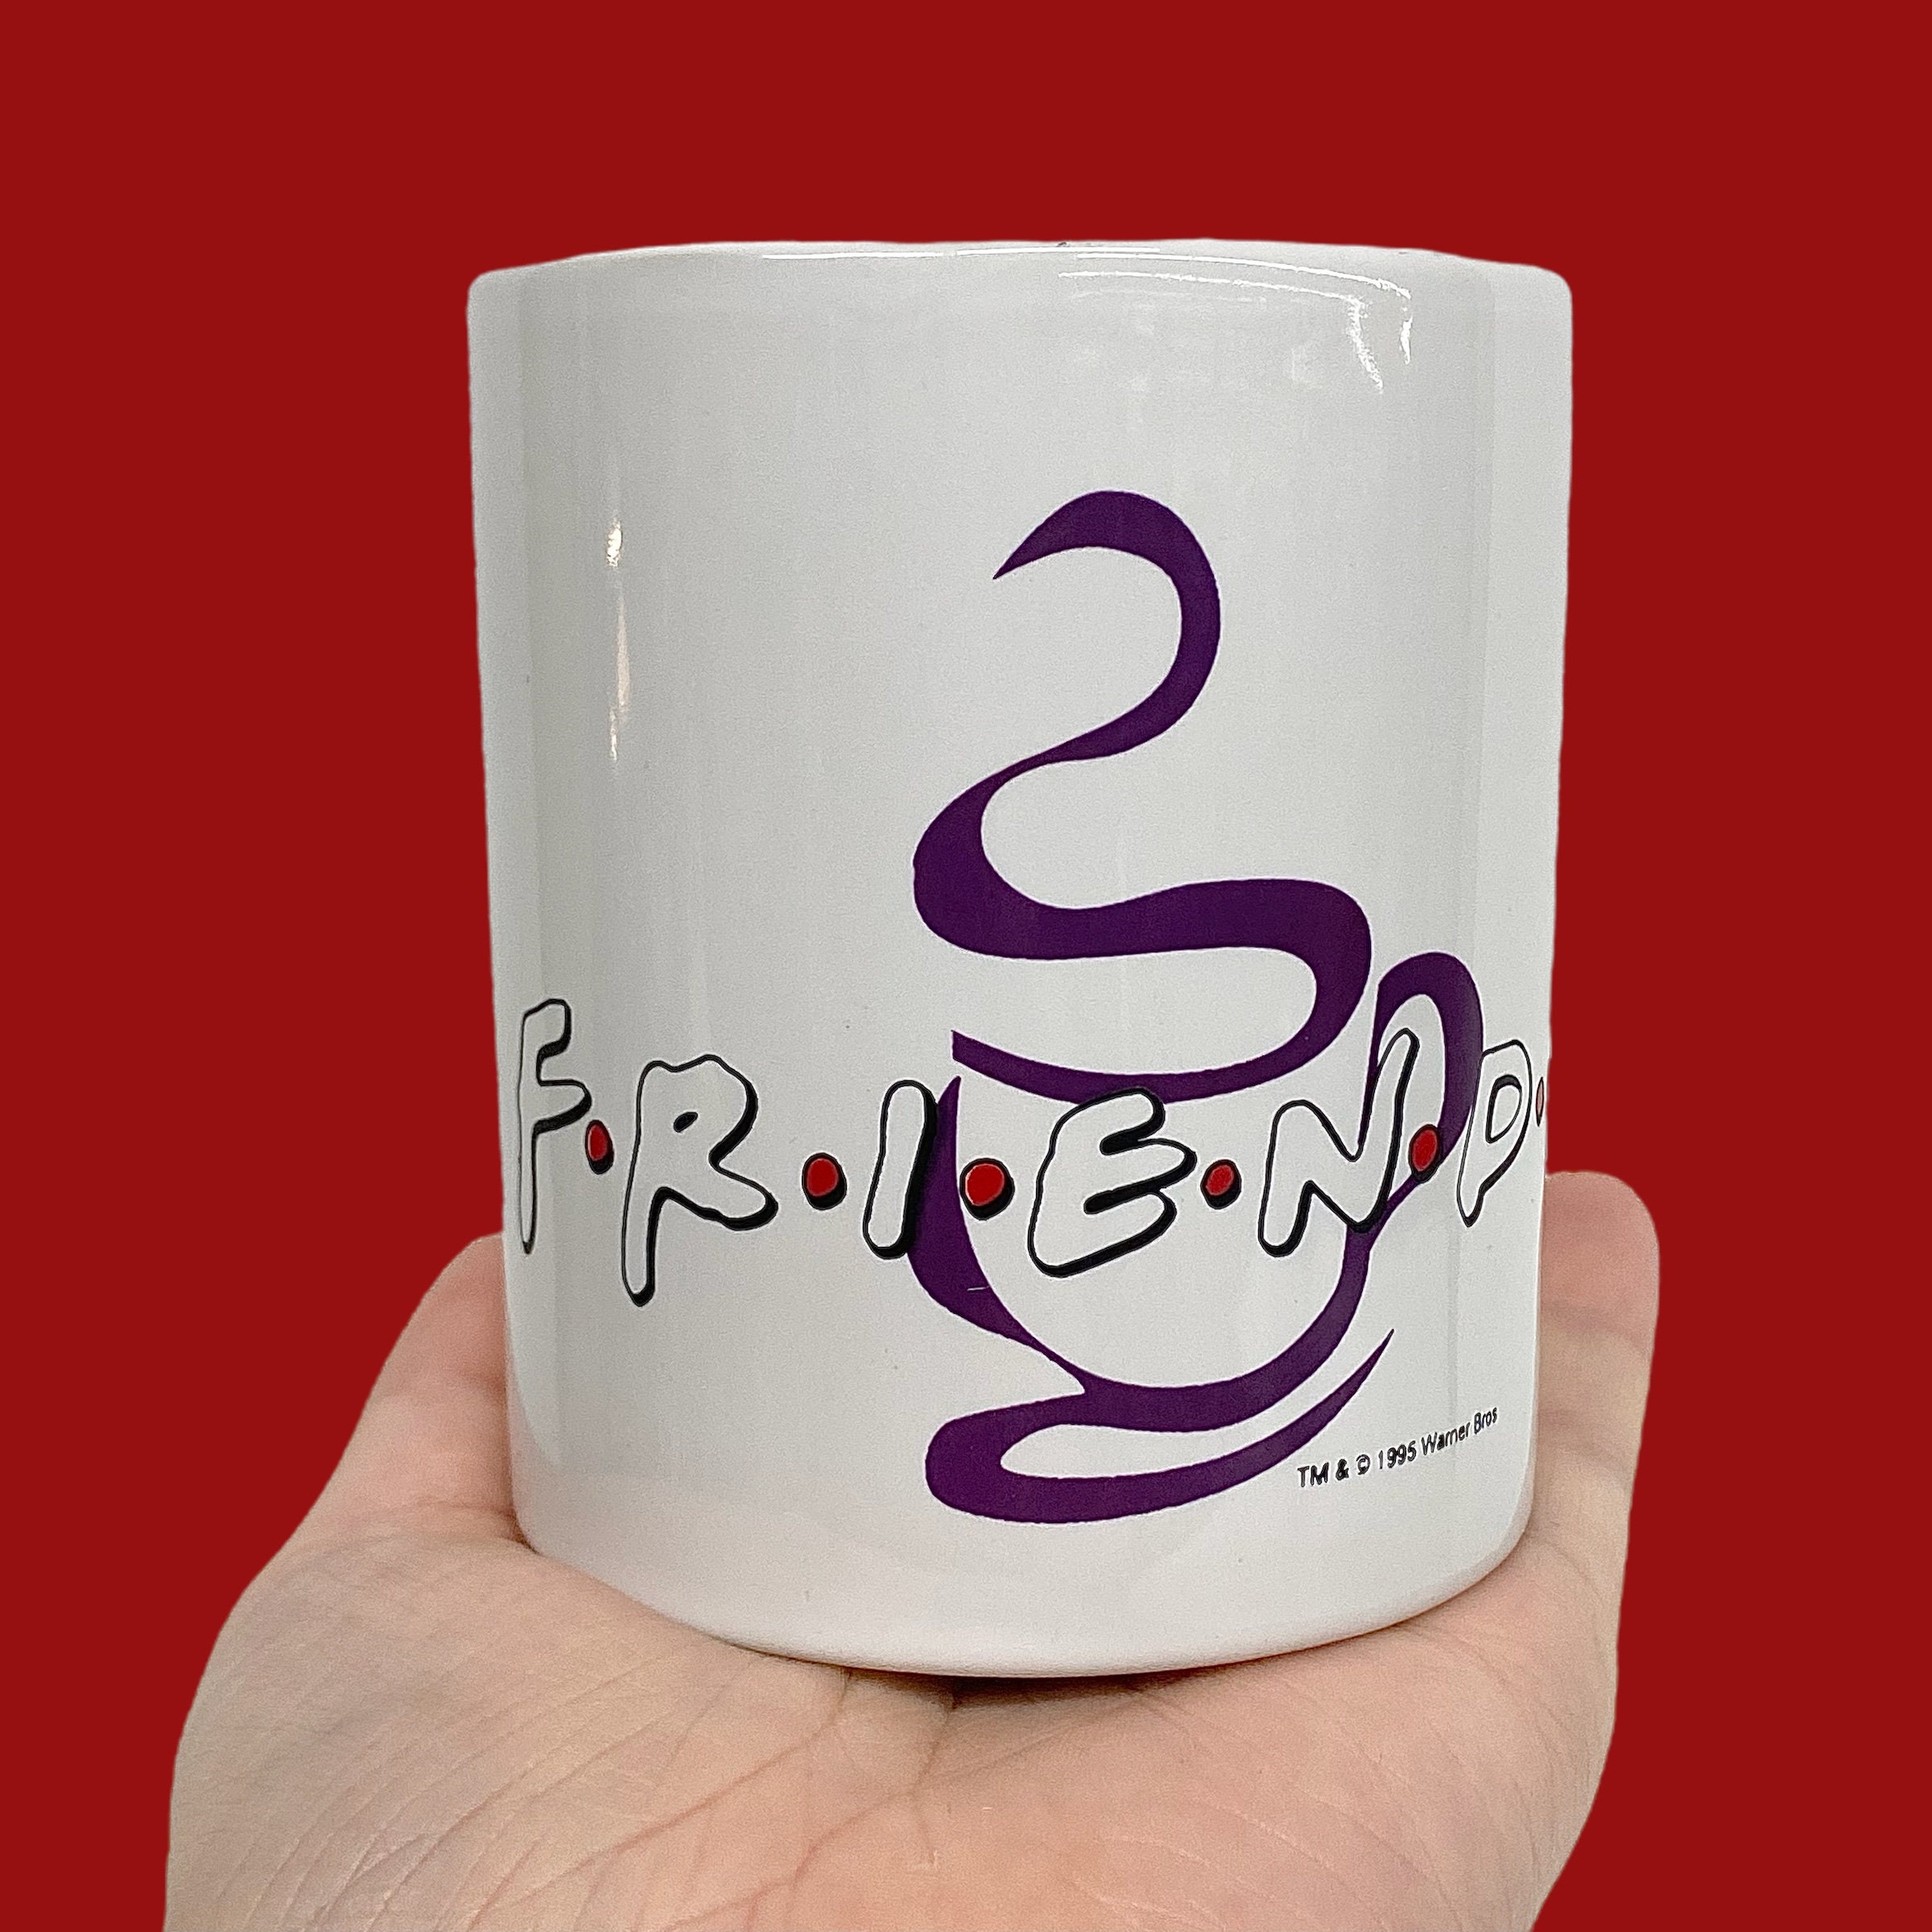 FRIENDS CHANDLER BING Coffee Mug Friends Tv Series Movie Merchandise Cup  Funny Sitcom Fans Gift Comedy Drama Romance Friendship 